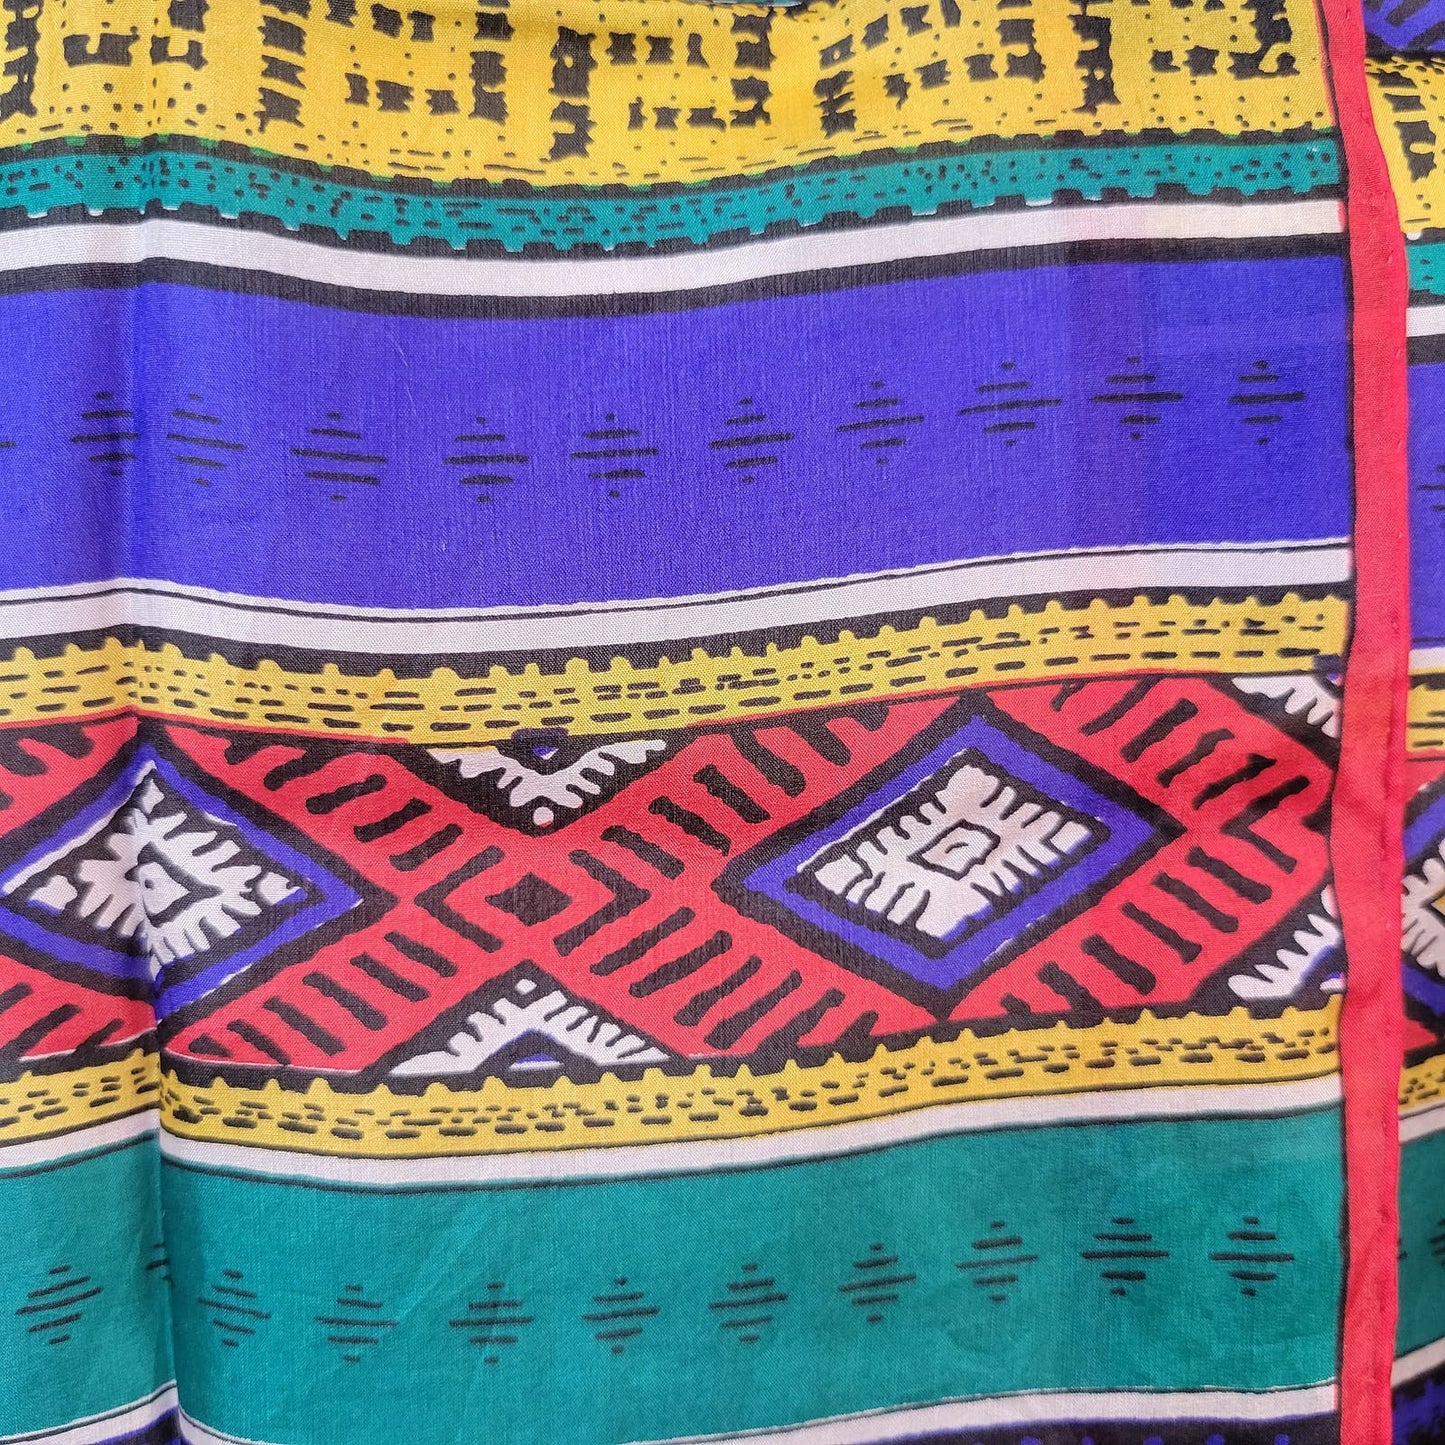 Oblong silk scarf, bright Southwest geometric pattern, vintage 1980s retro style